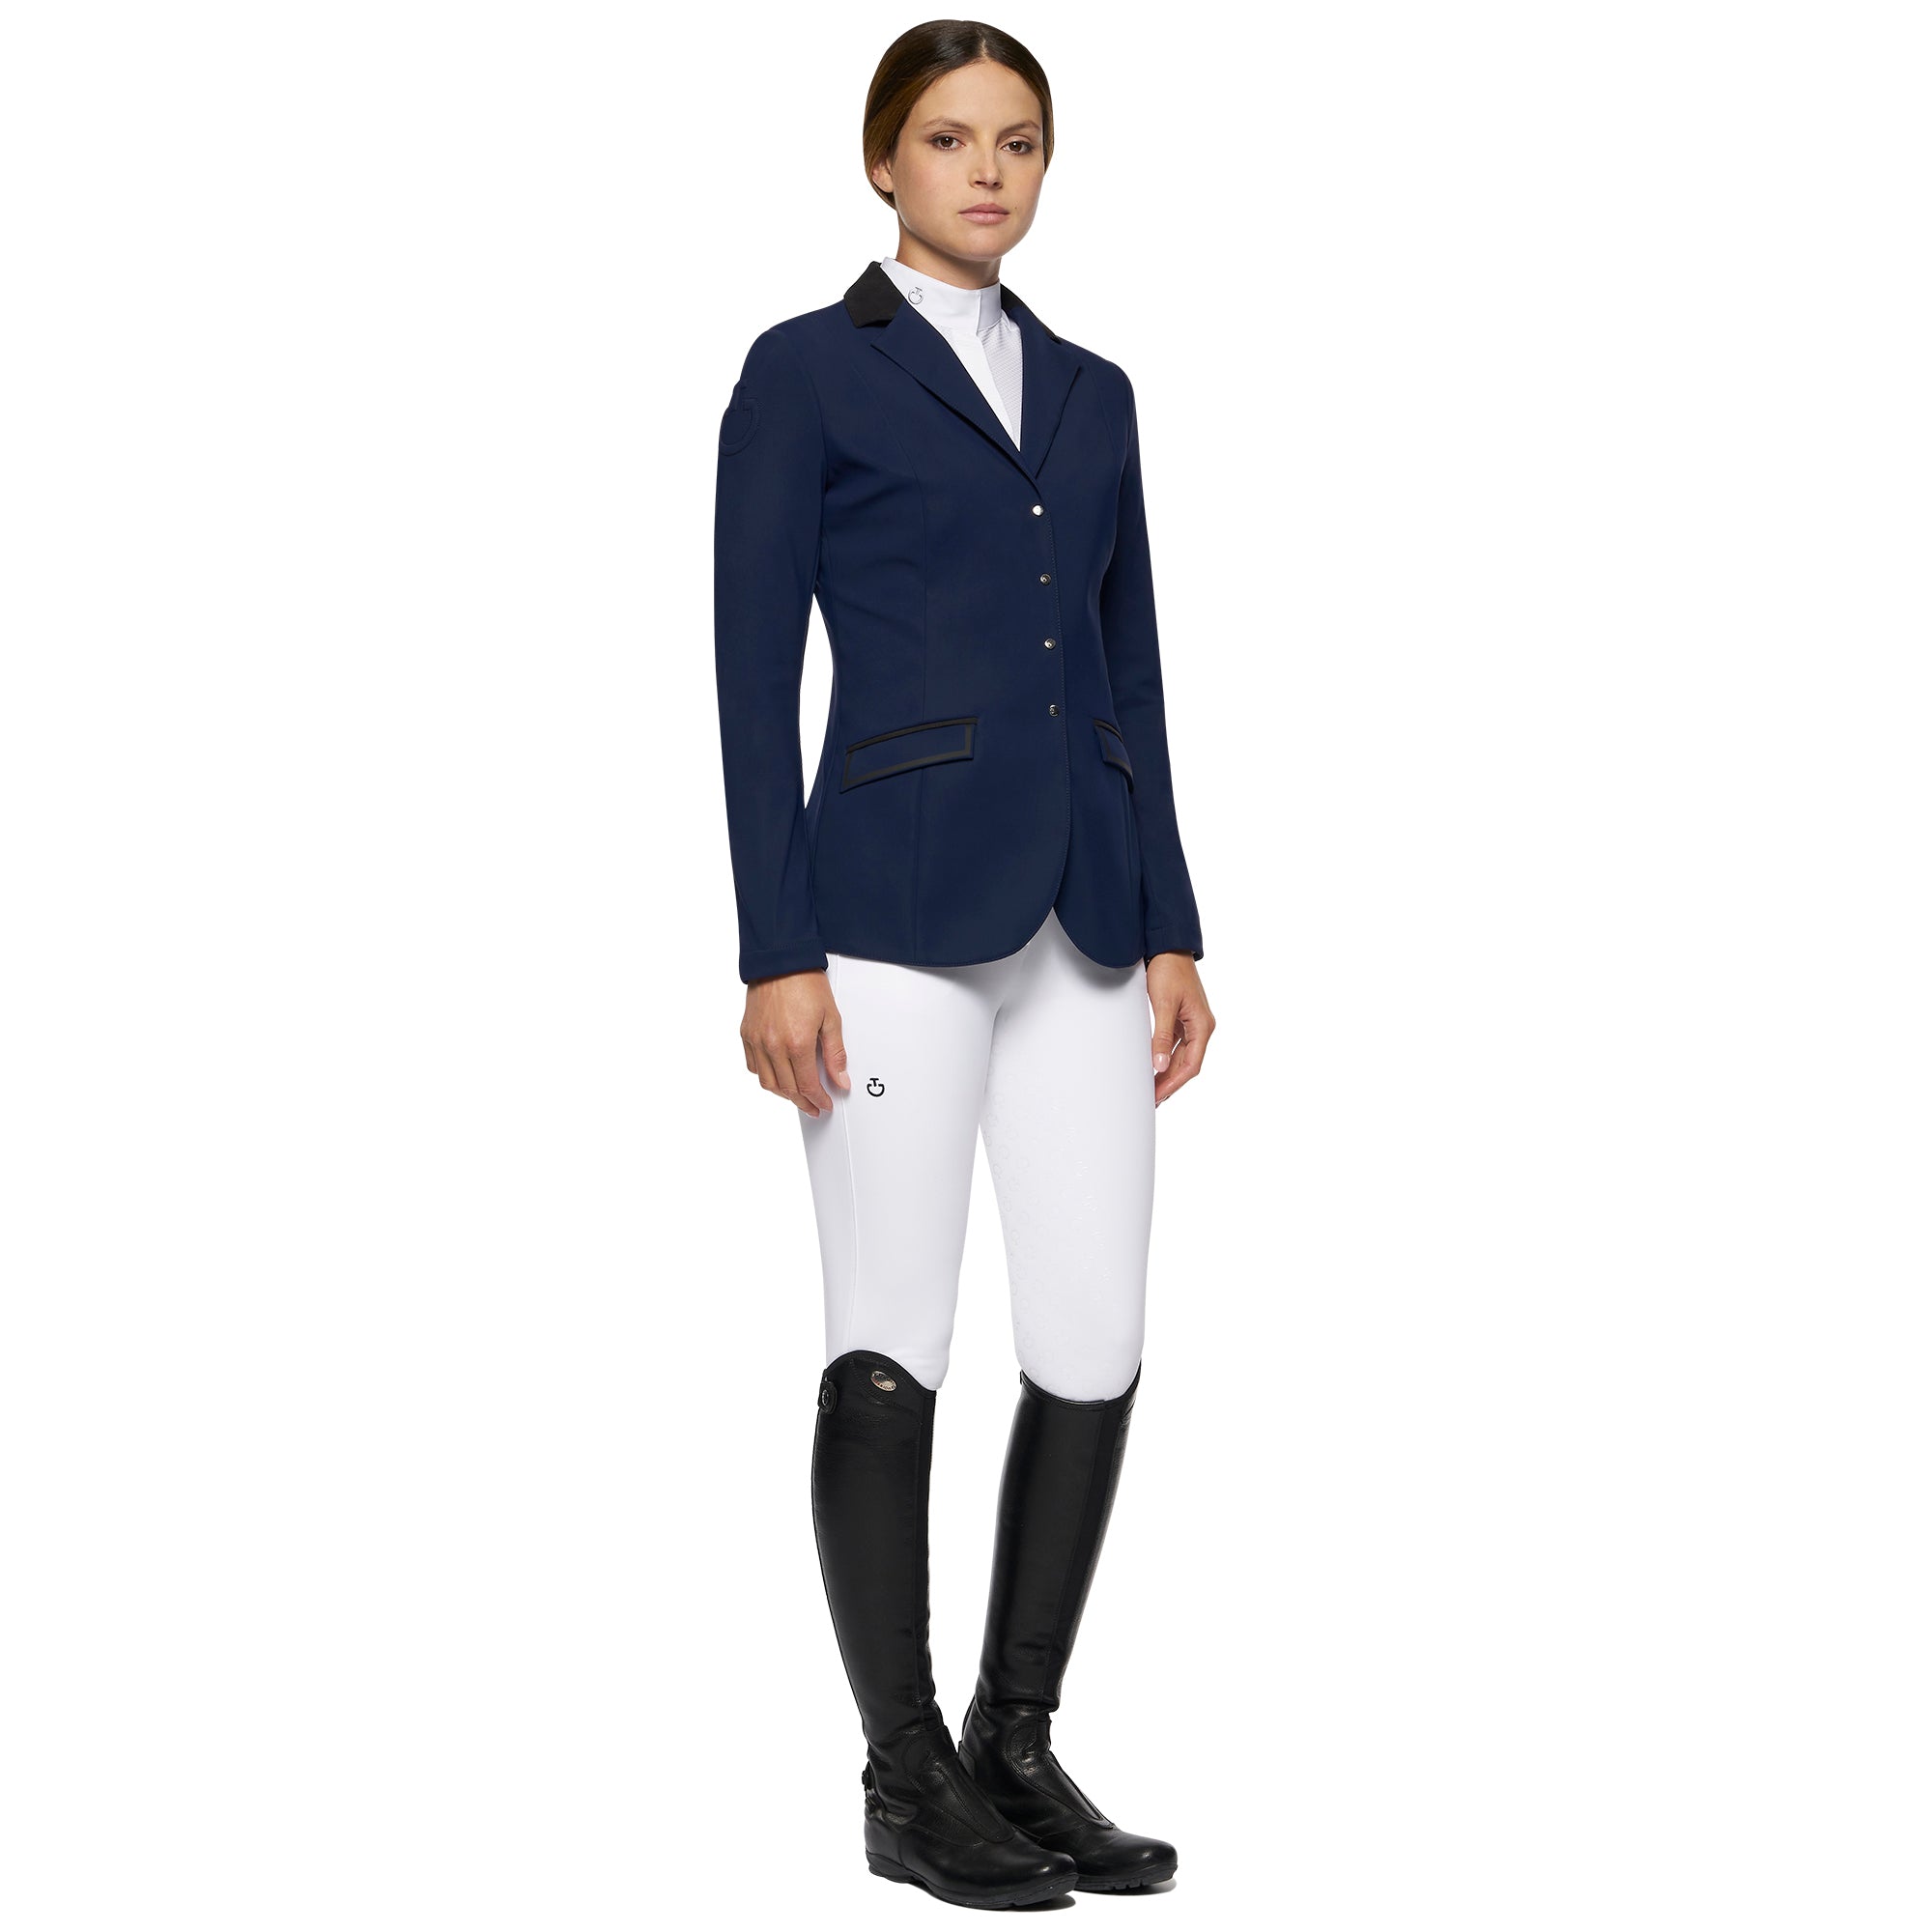 Cavalleria Toscana Royal Navy Blue lightweight zip jersey jacket